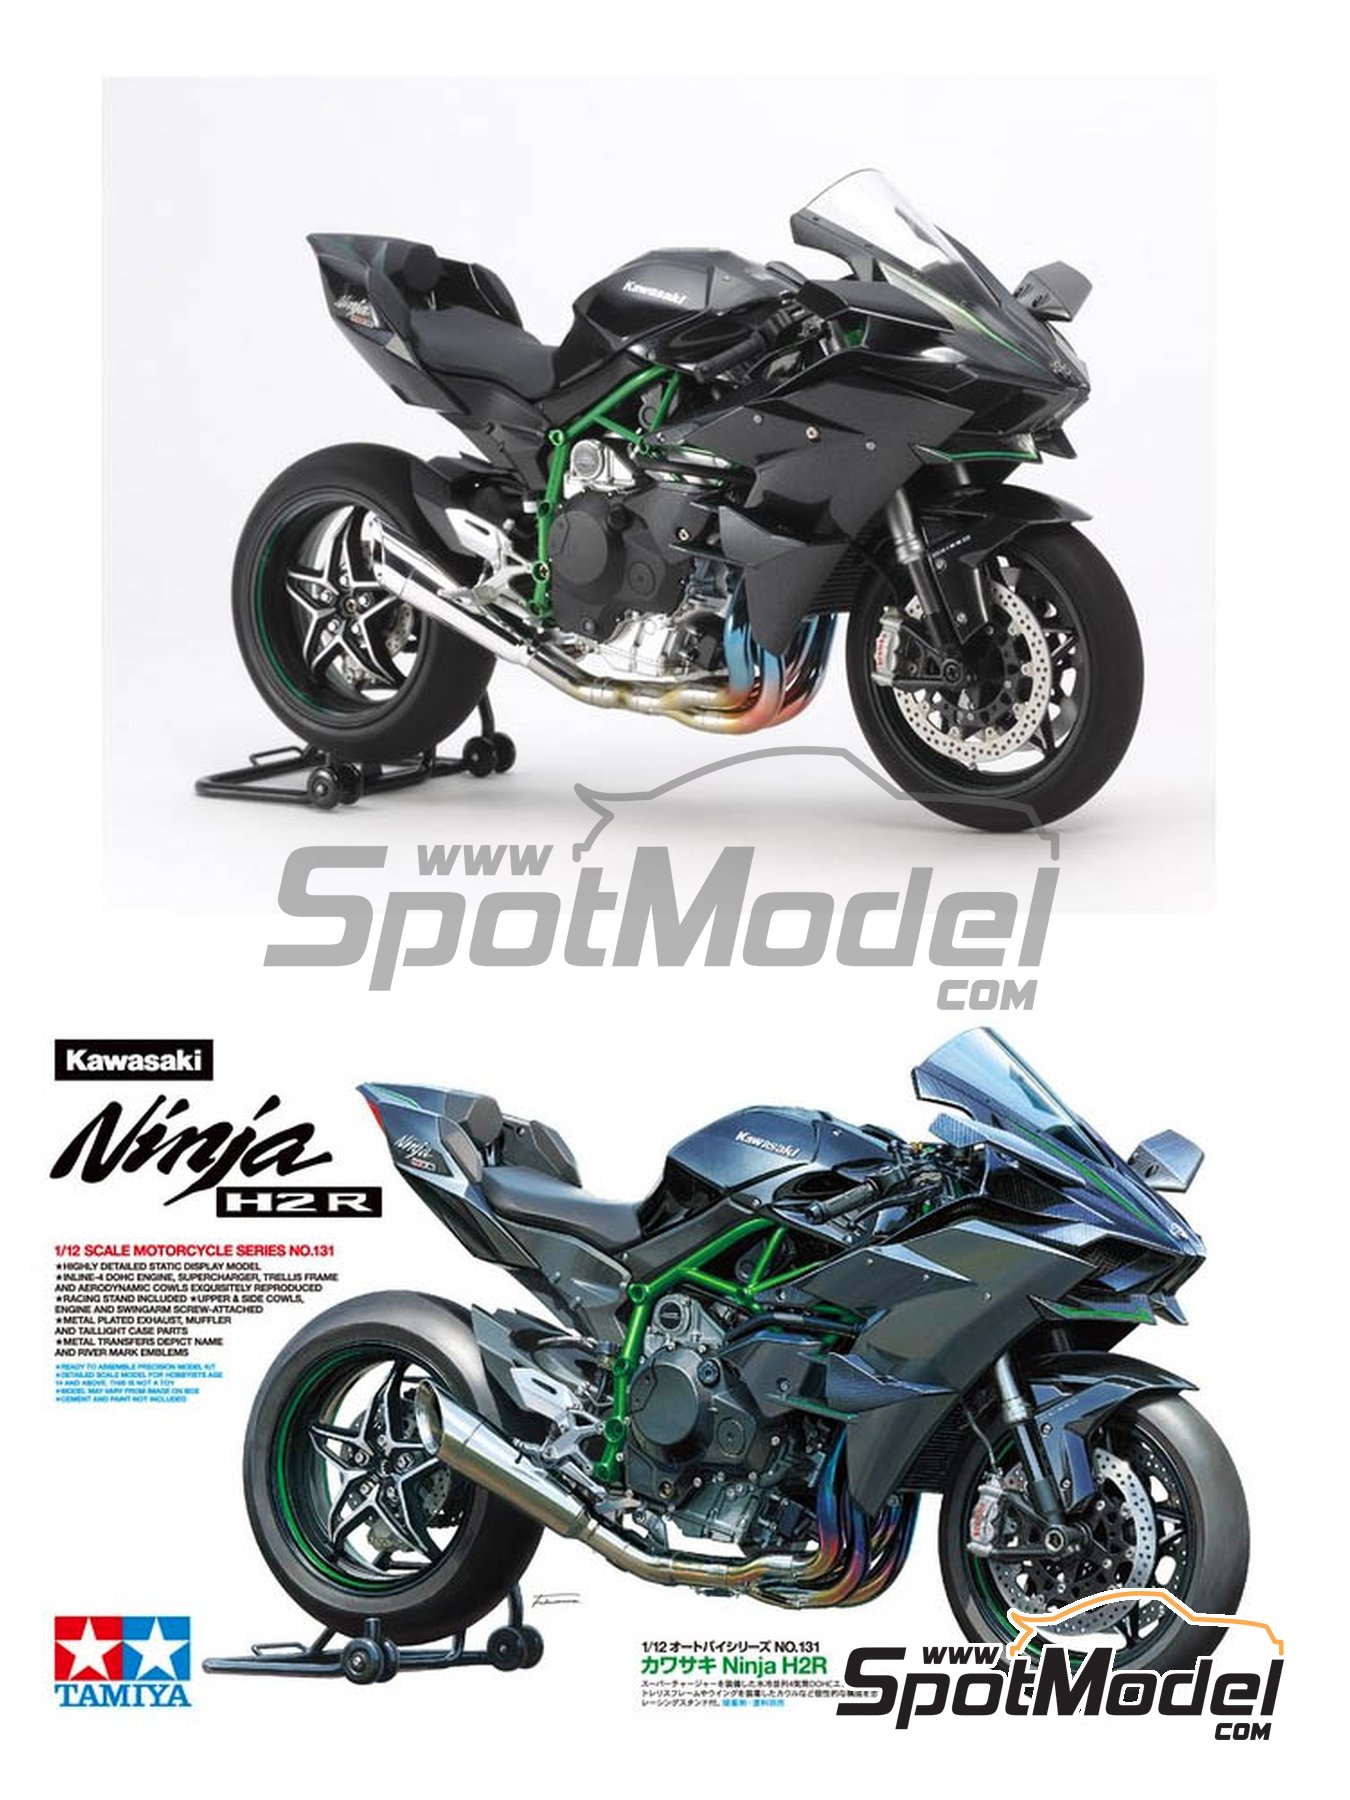 Tamiya 14131 1/12 Scale Sport Bike Model Kit Kawasaki Ninja H2R Motorcycle H2-R 